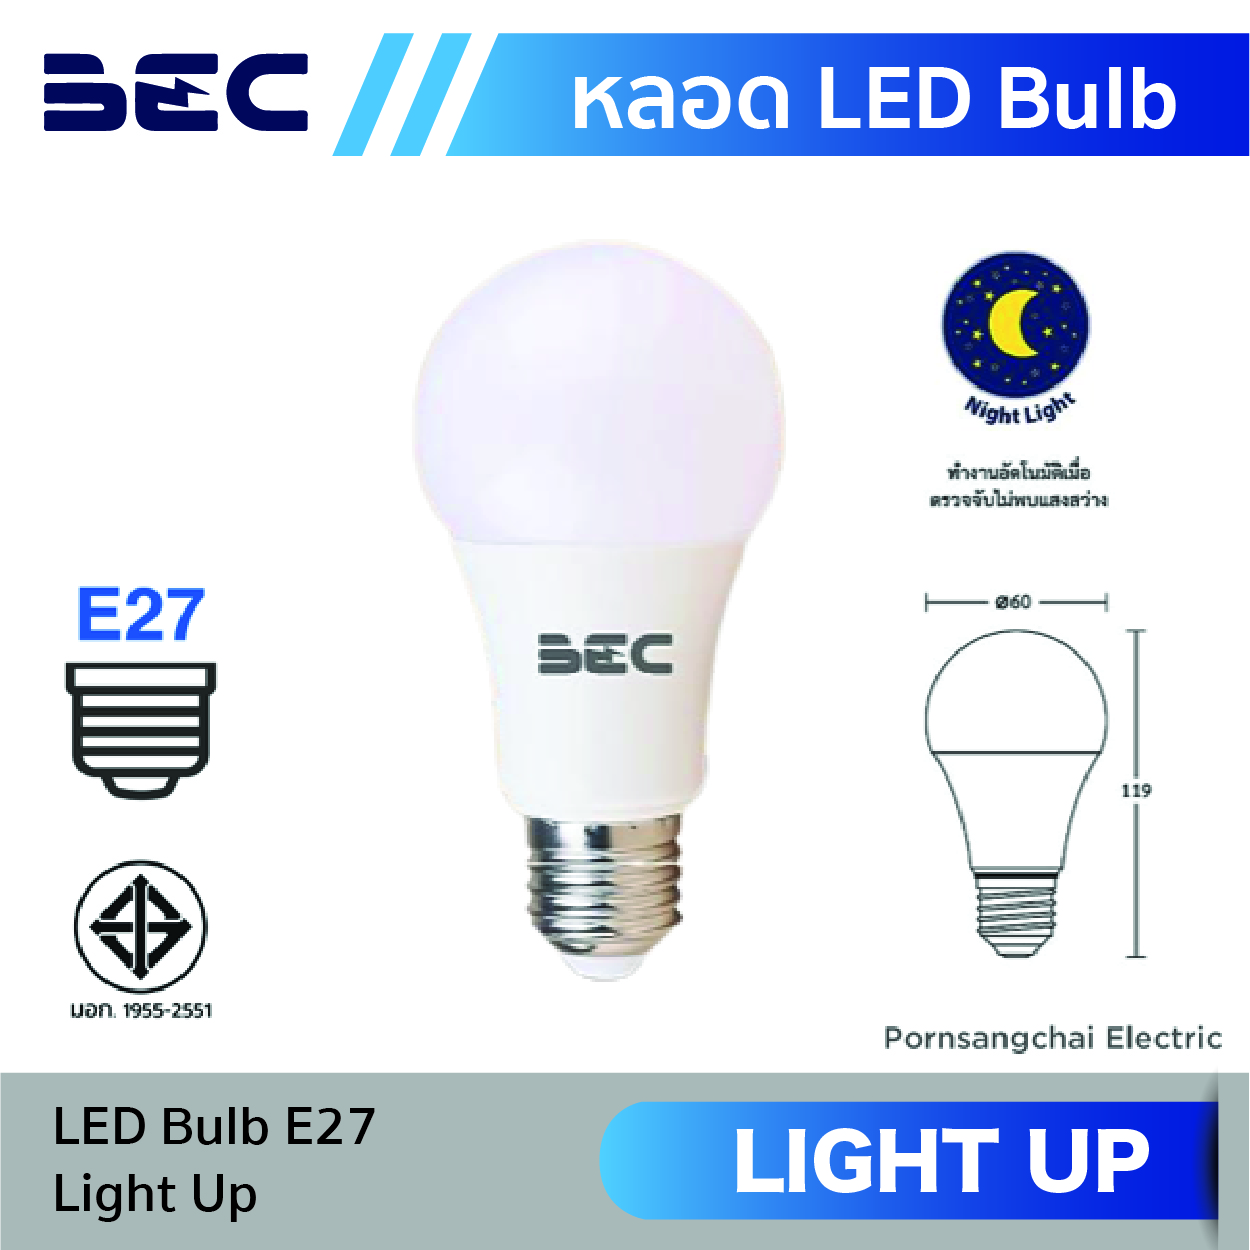 LED Bulb BEC Light Up